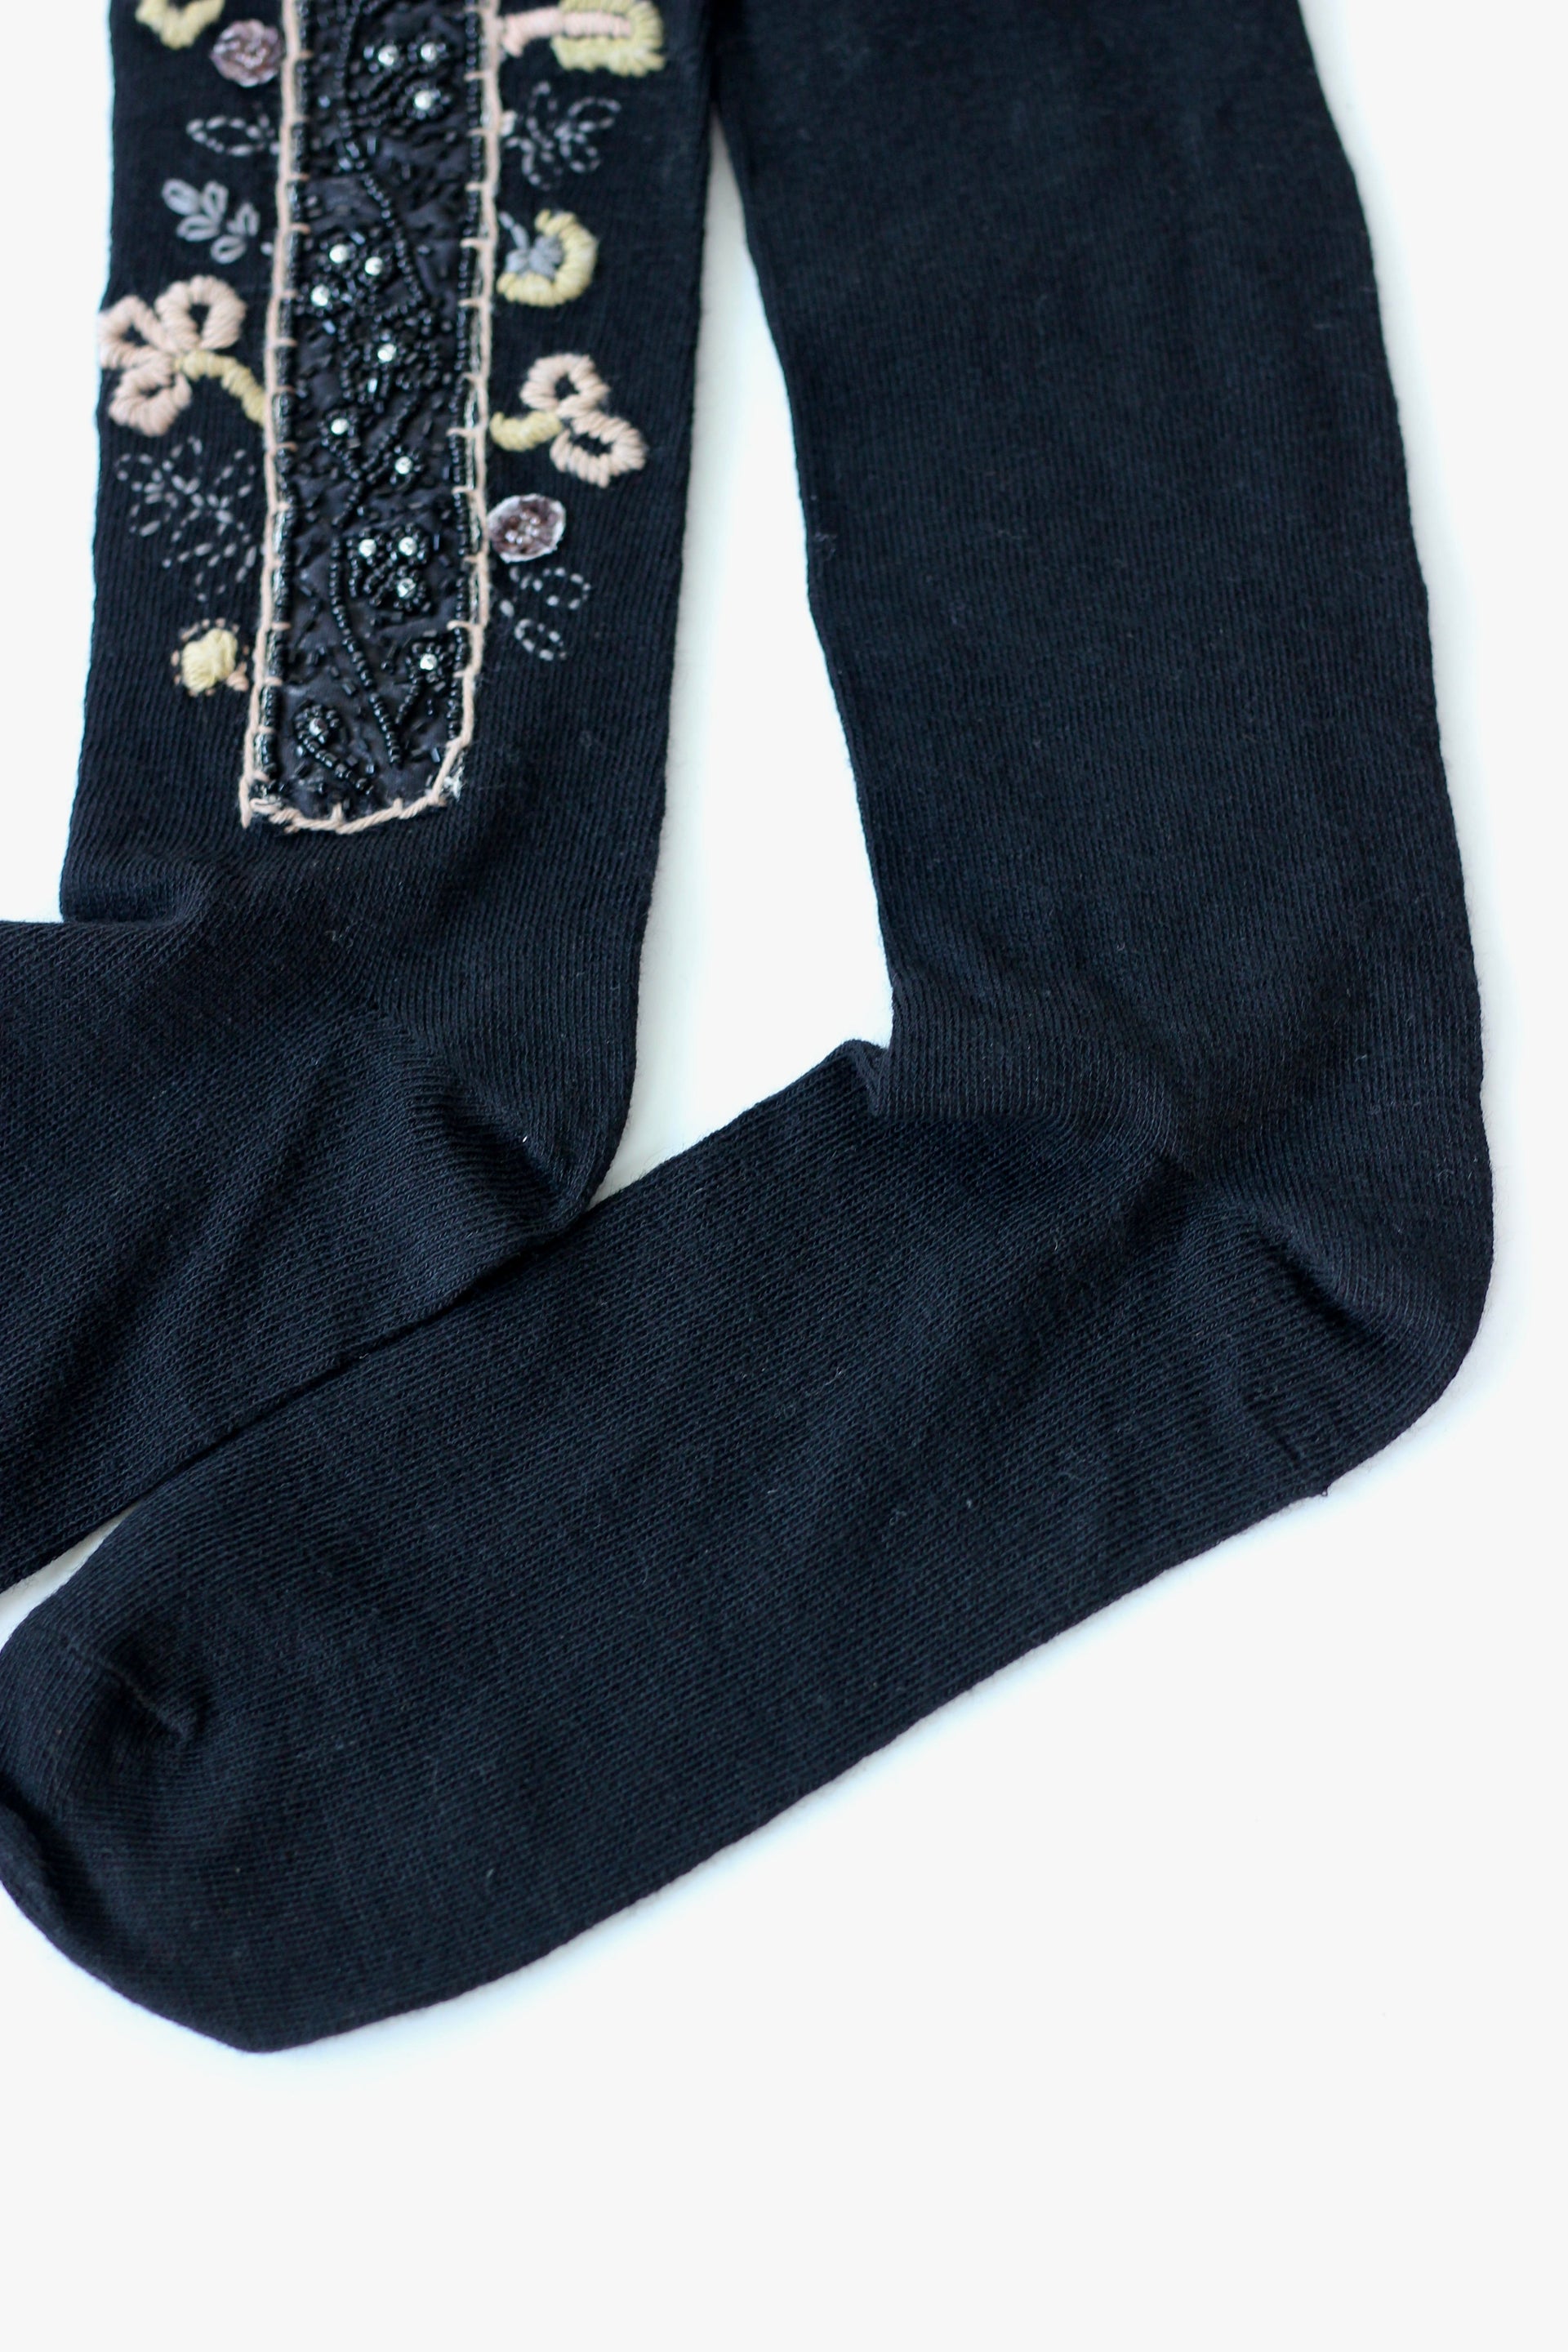 Vintage Y2K Hand Decorated High Socks//Size M/L